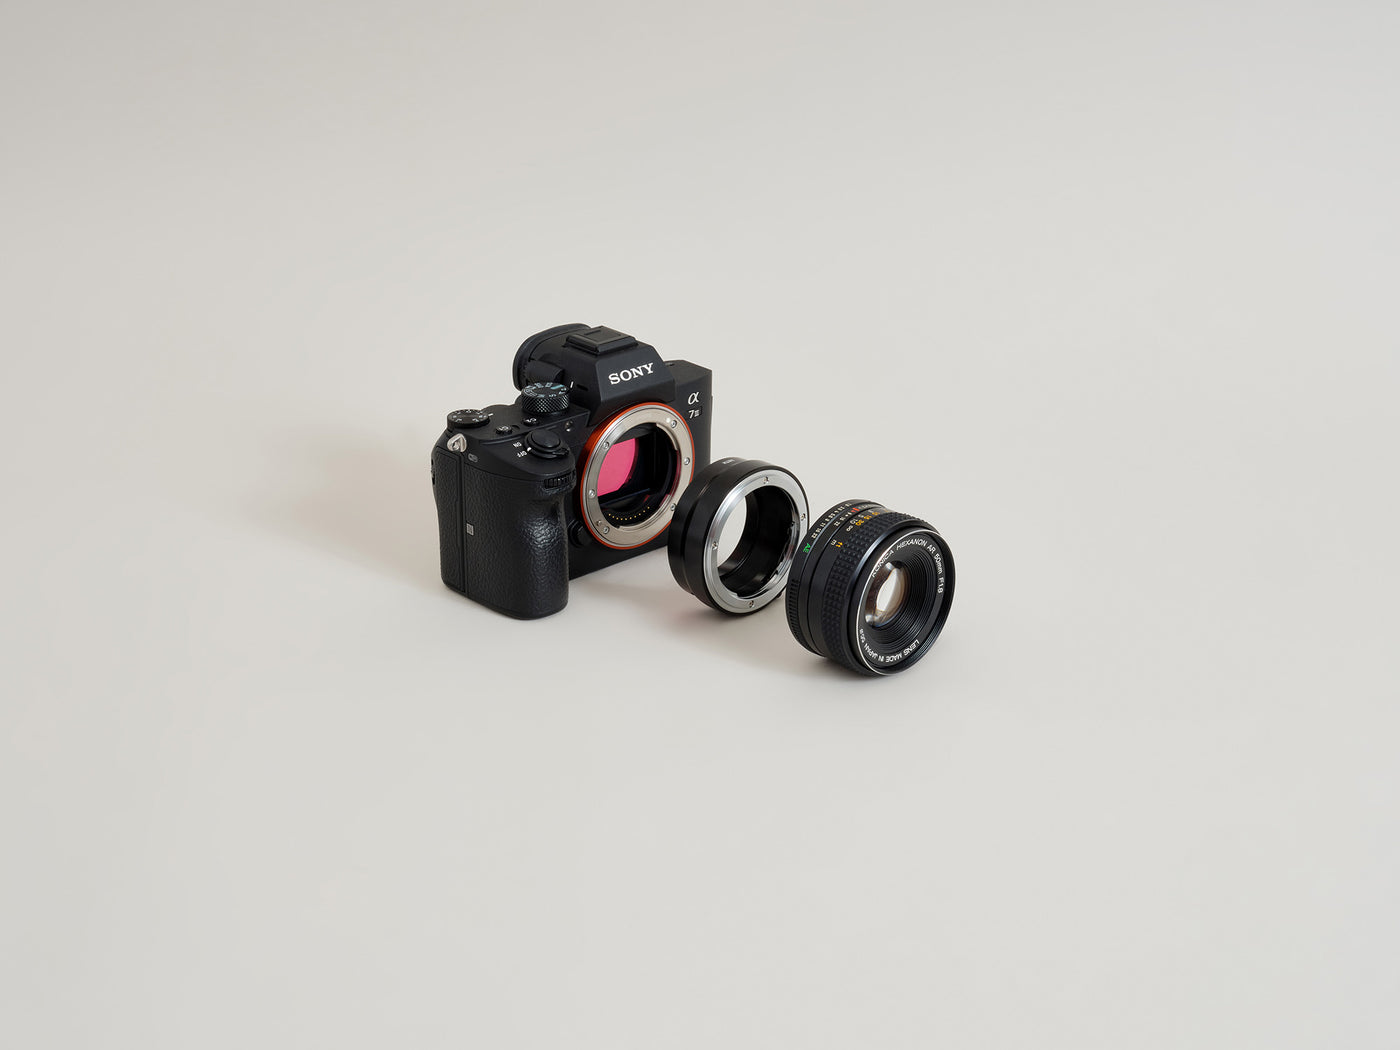 Konica AR Lens Mount to Sony E Camera Mount